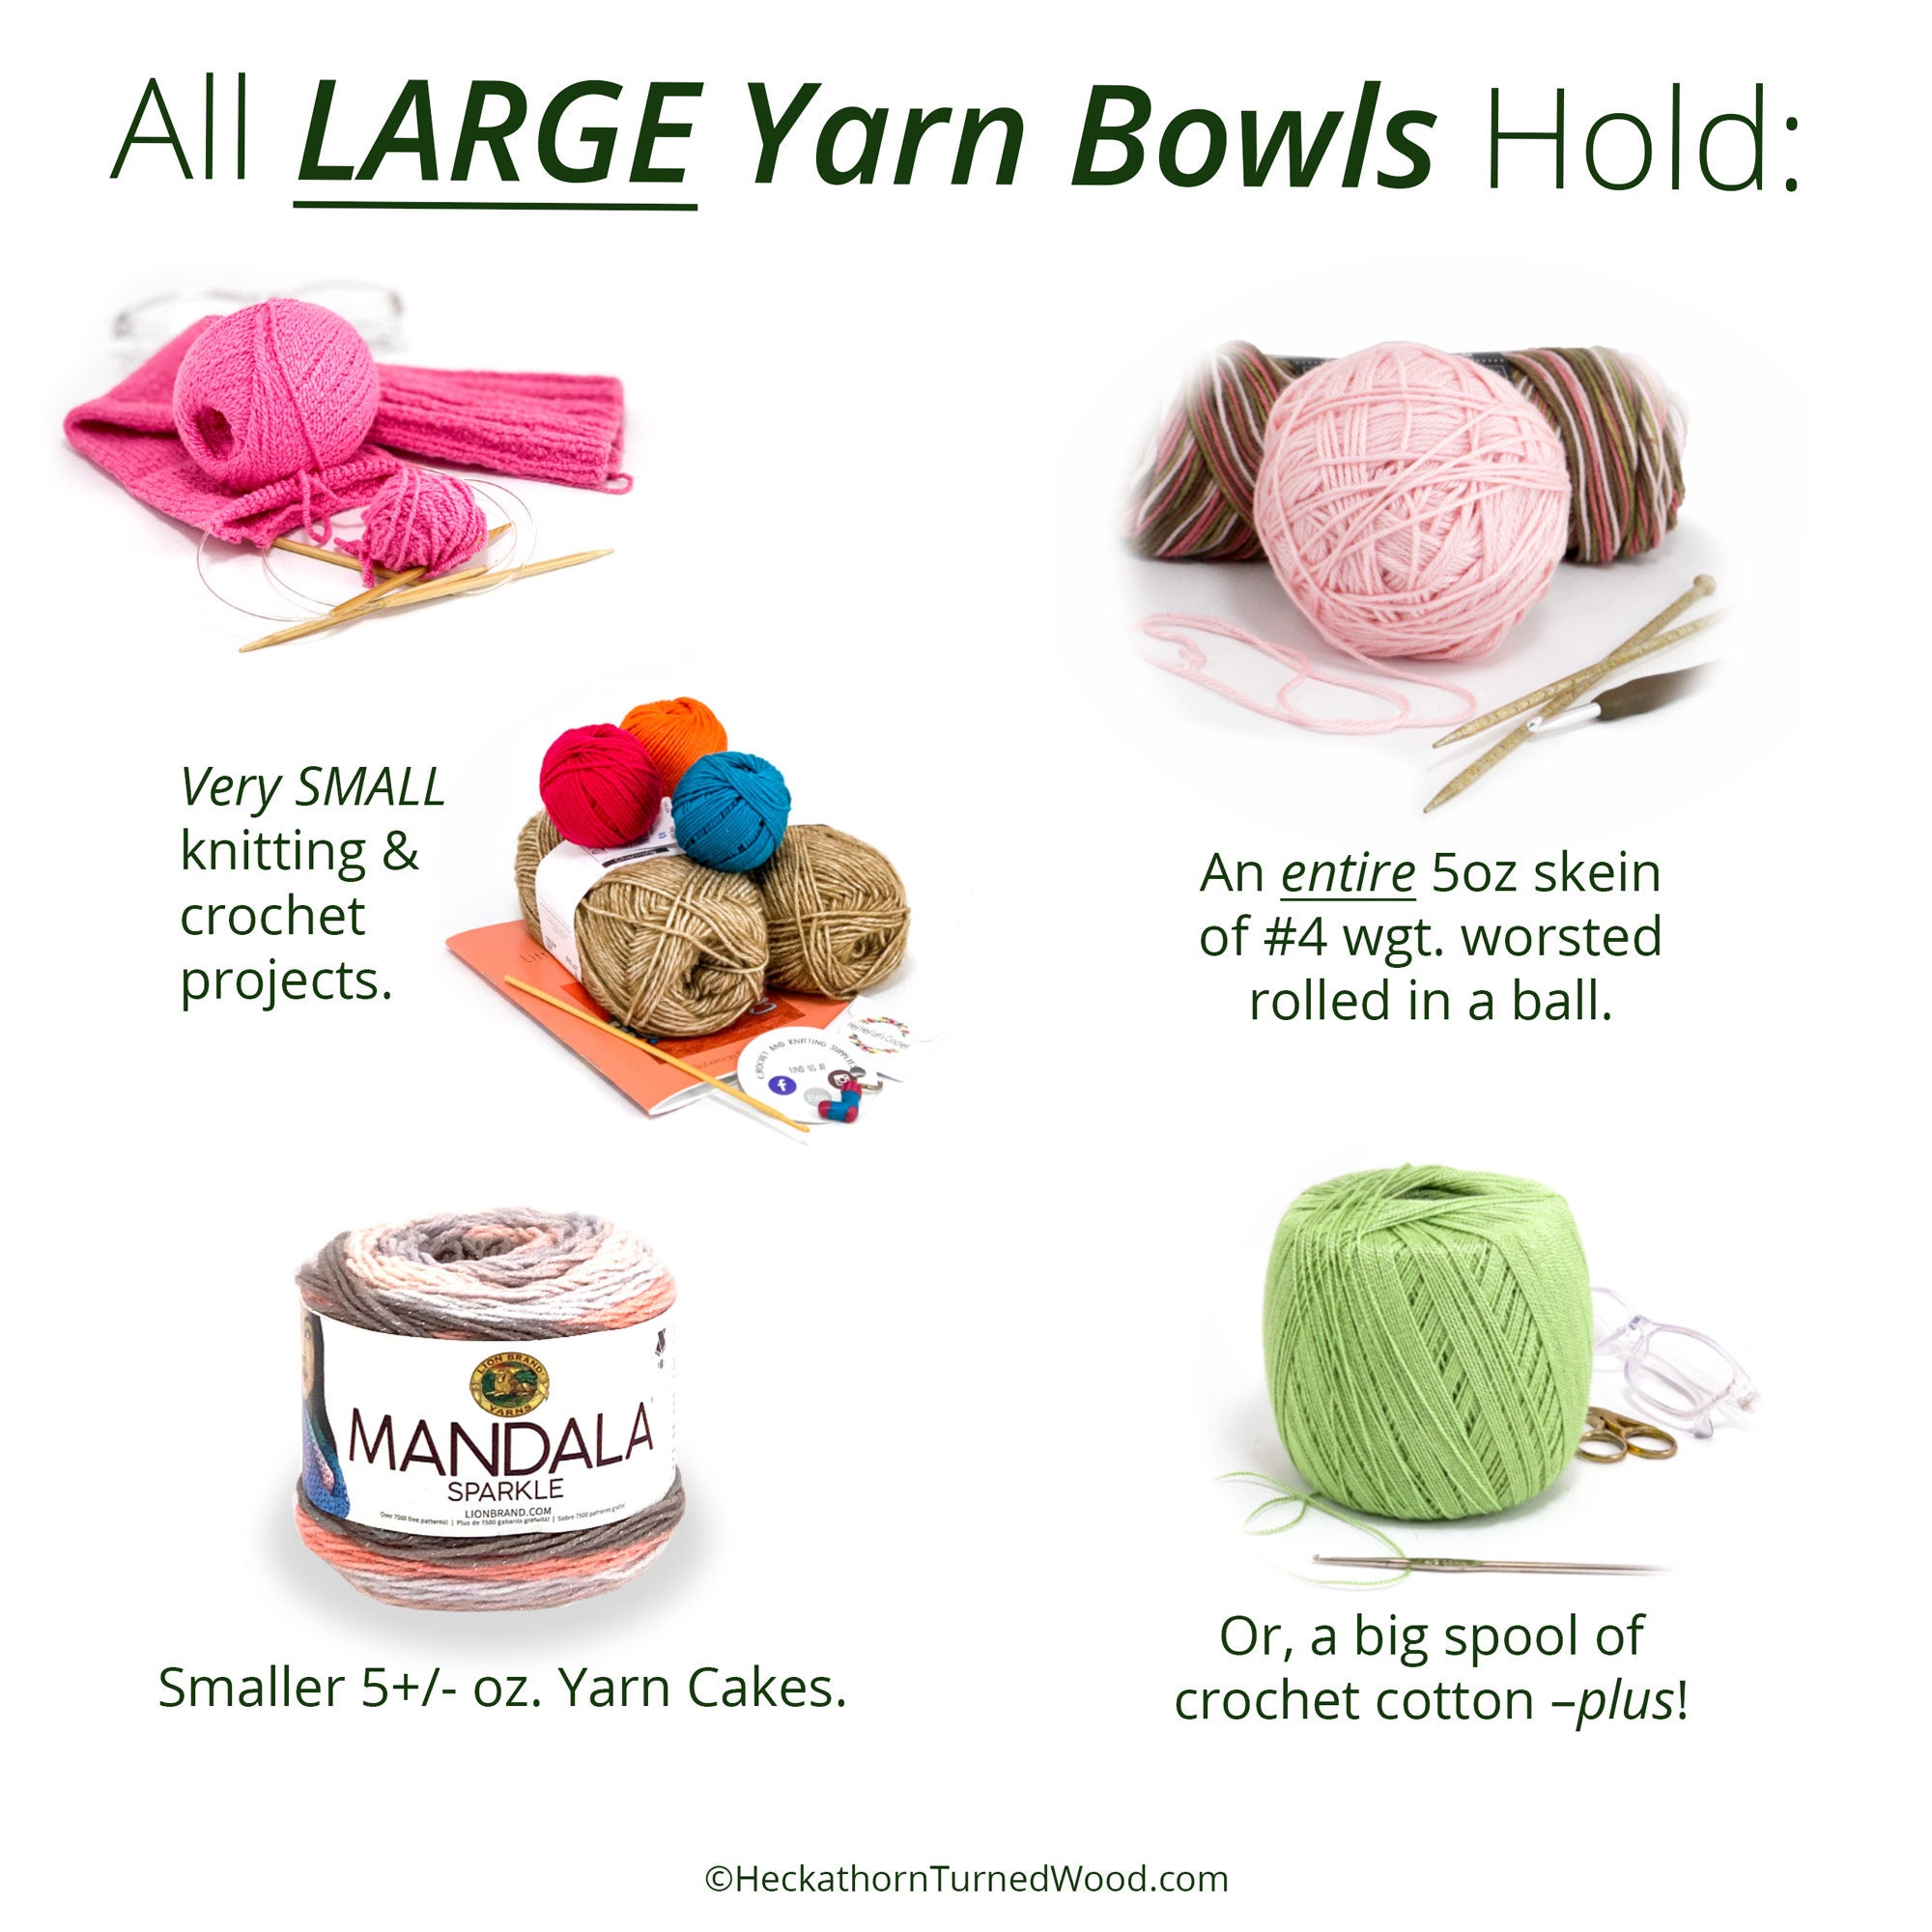 How Big Is That Yarn Bowl?